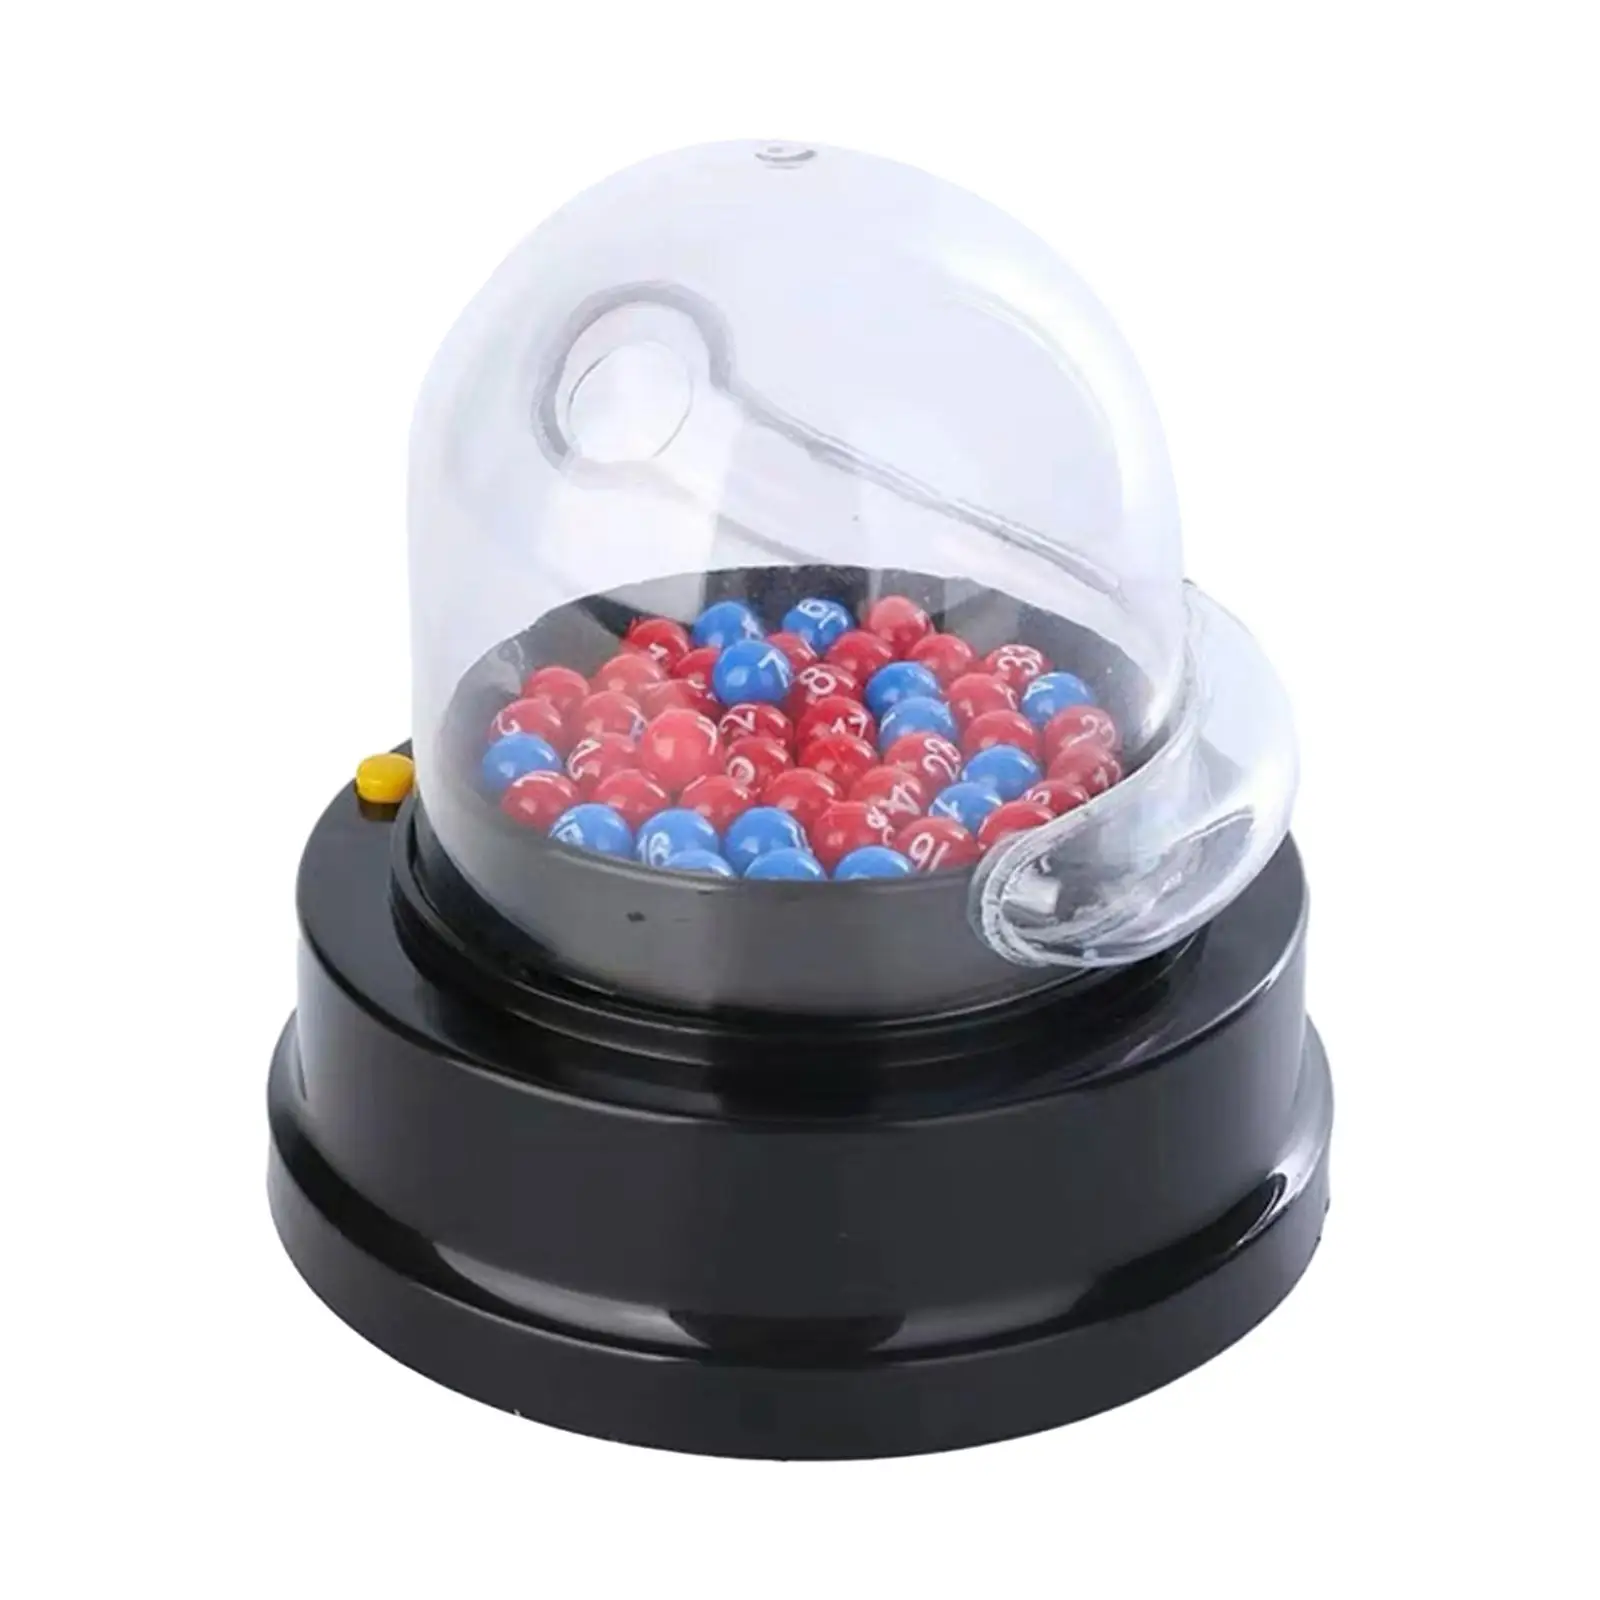 Electric Raffle Balls Machine Portable Bingo Machine Game with Balls for Club Restaurant Recreational Activity Sweepstakes